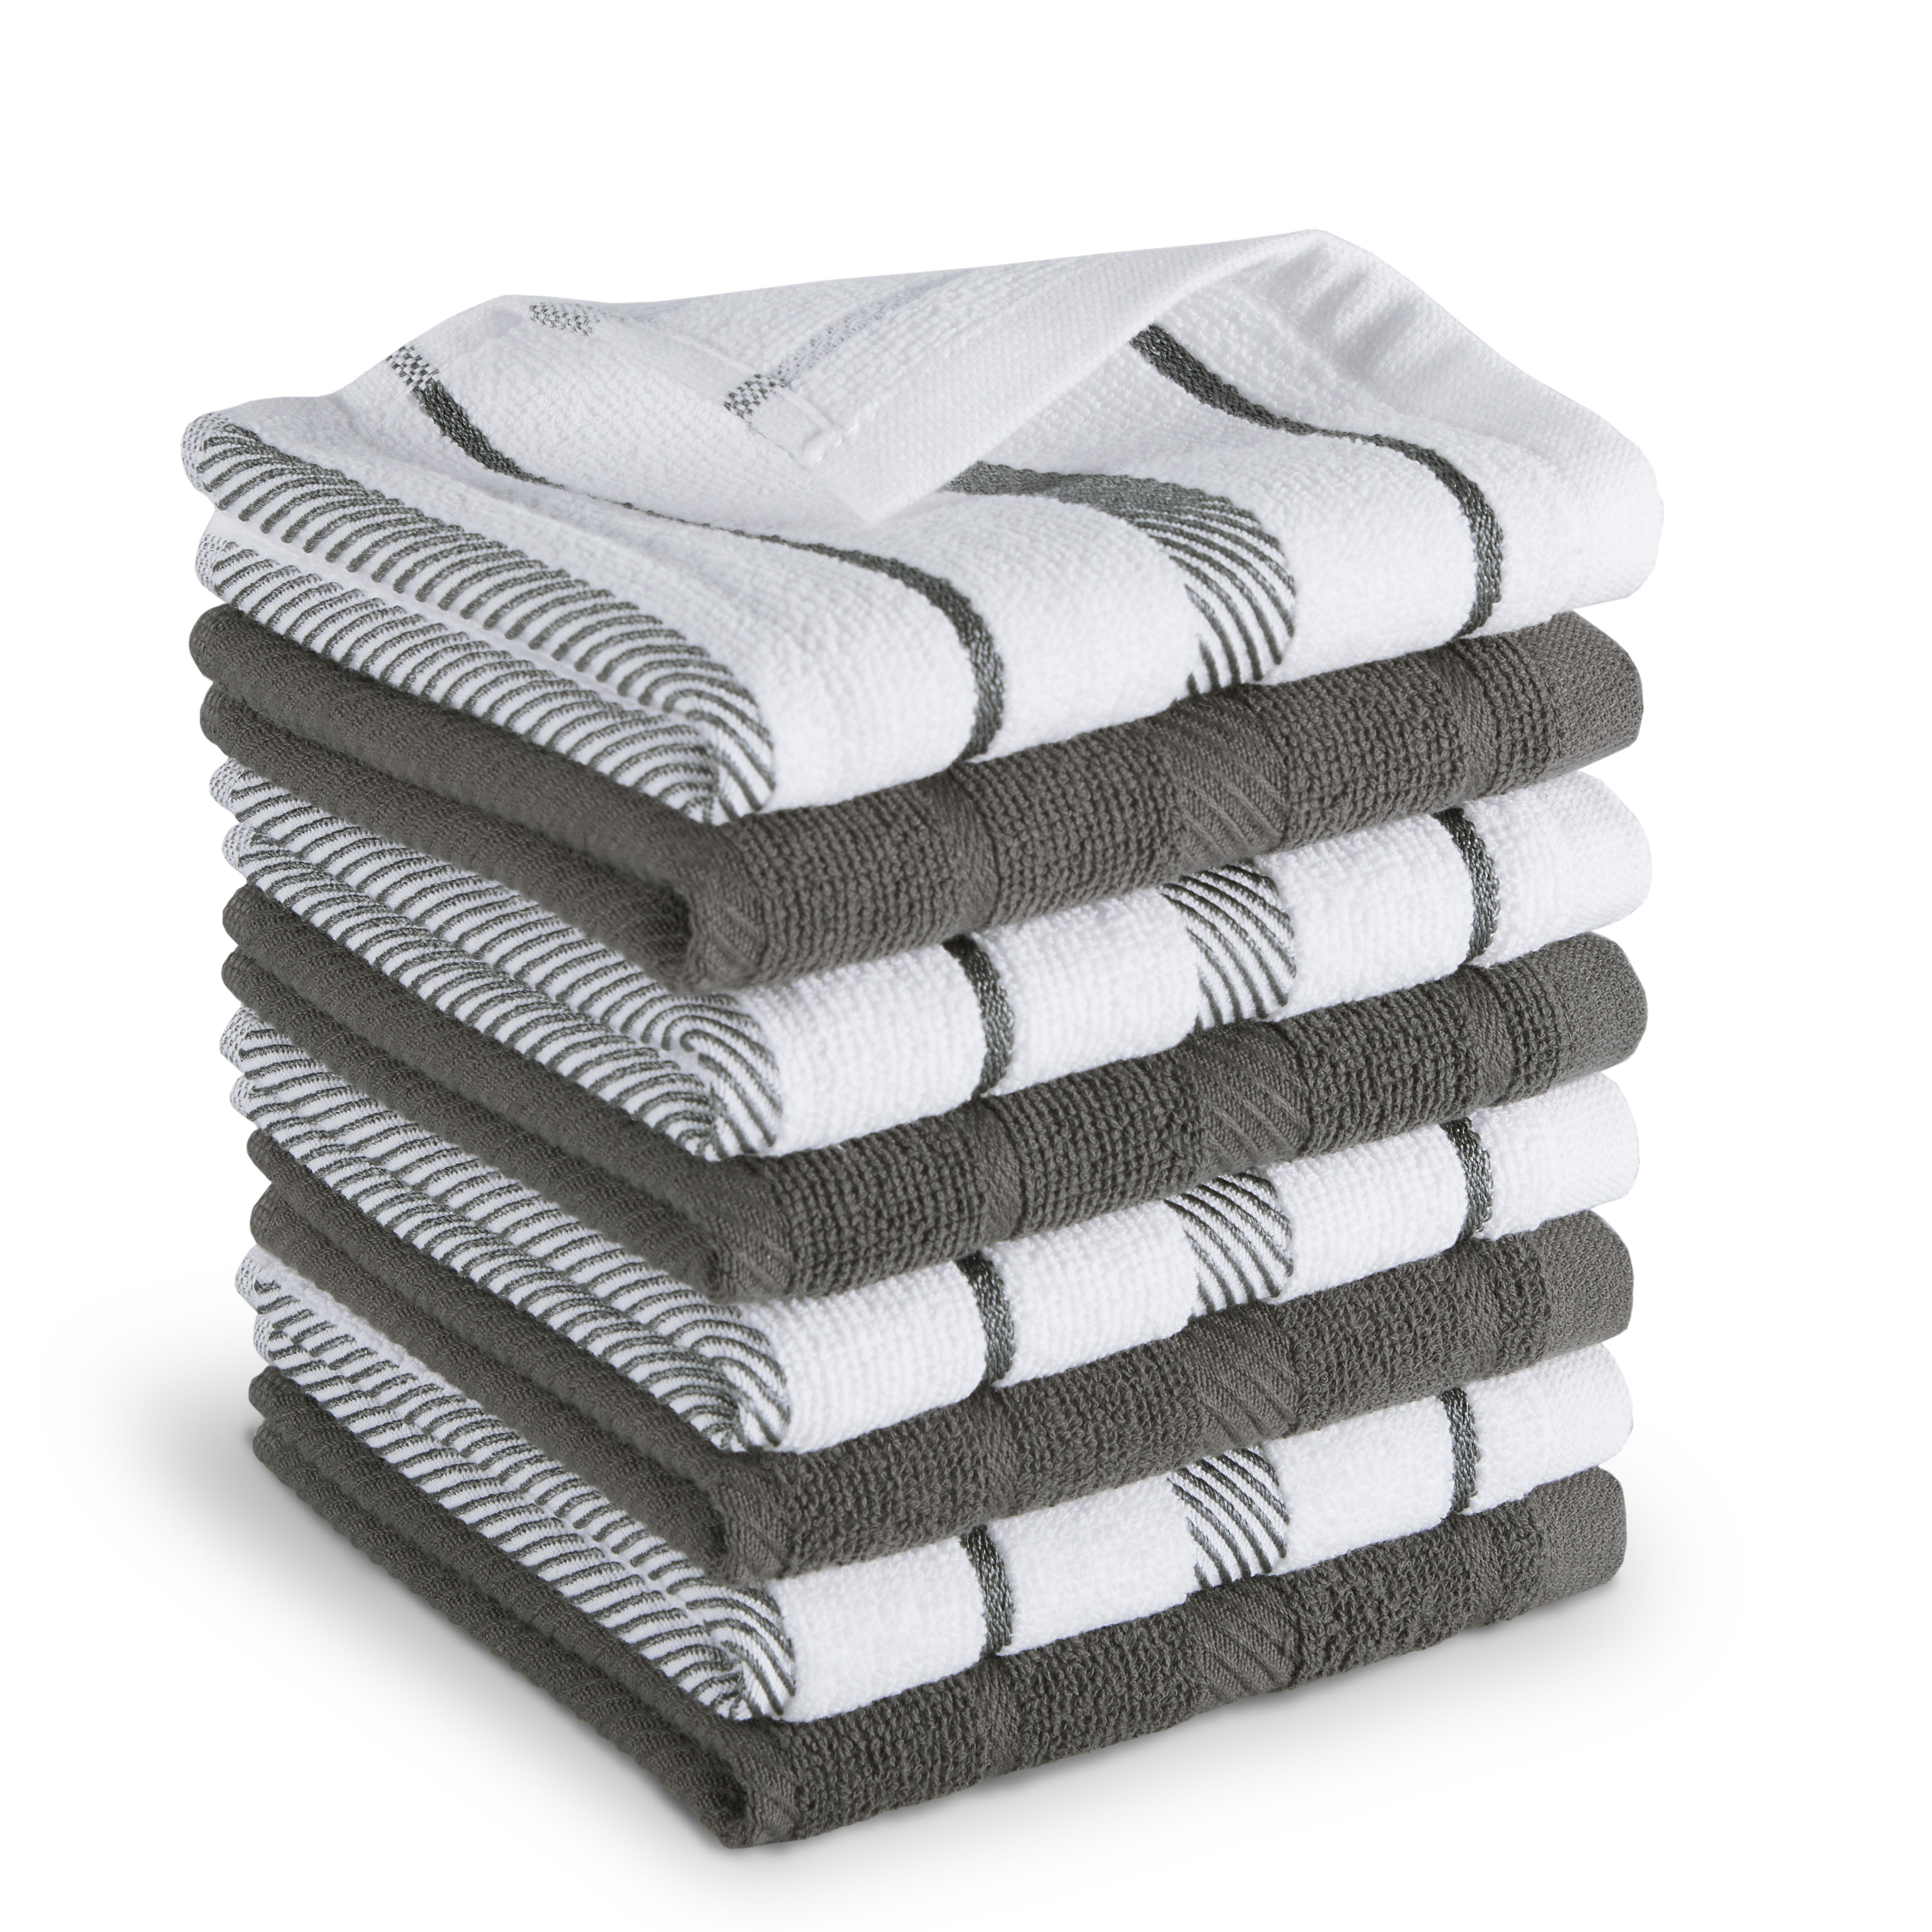 Kitchen Towels - Oven Mitts - Potholders - Towel Linen Set (8 Pc) Clean Classic Multi Color Combination - Kitchen Towel Potholder Scrubber Dishcloth